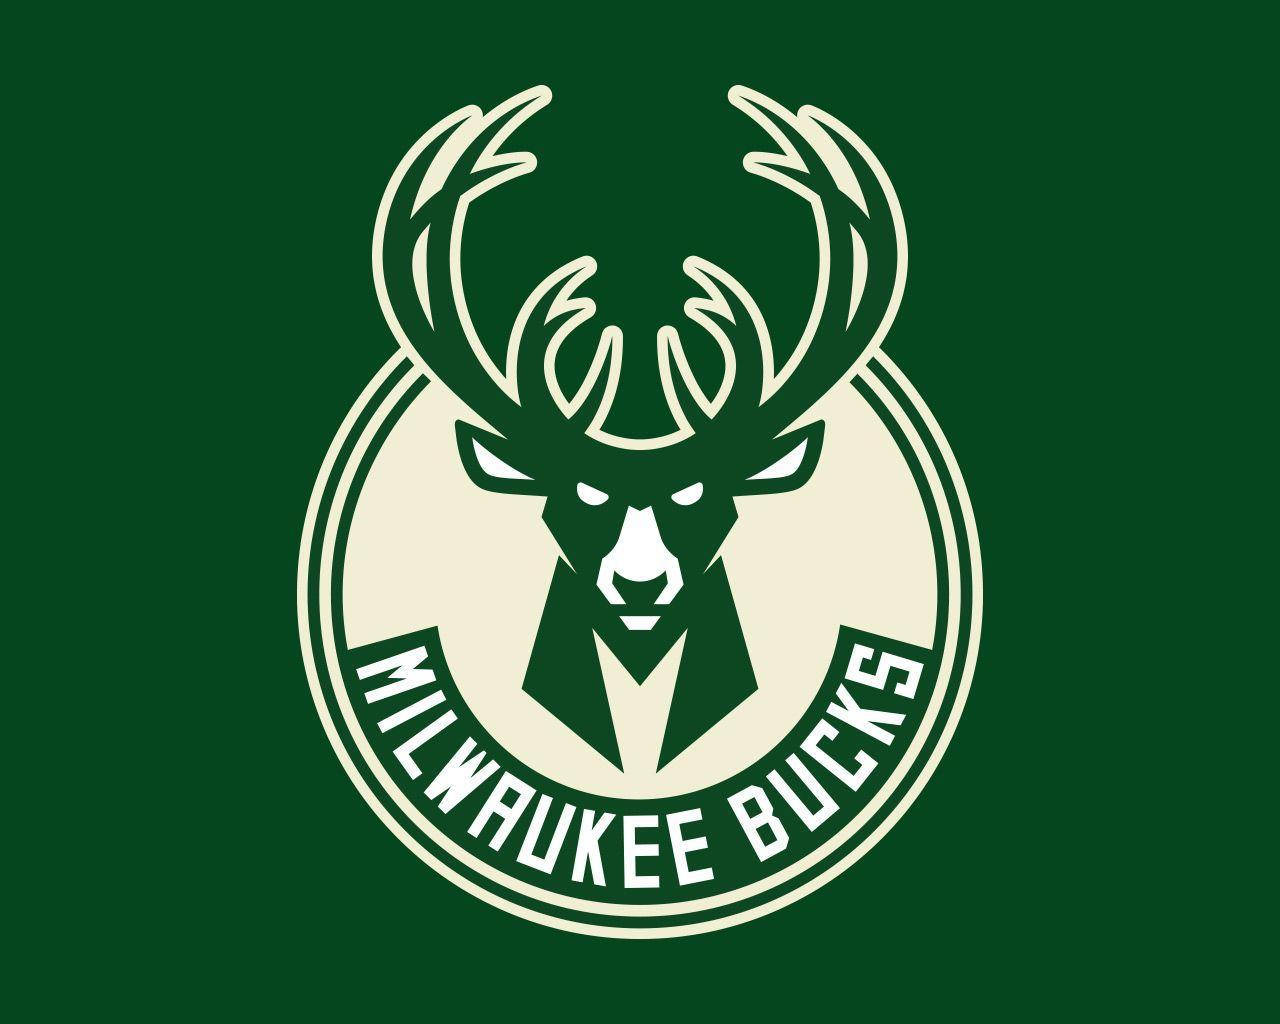 Prided Milwaukee Bucks Green Flag Waving Strong Against Clear Sky Wallpaper